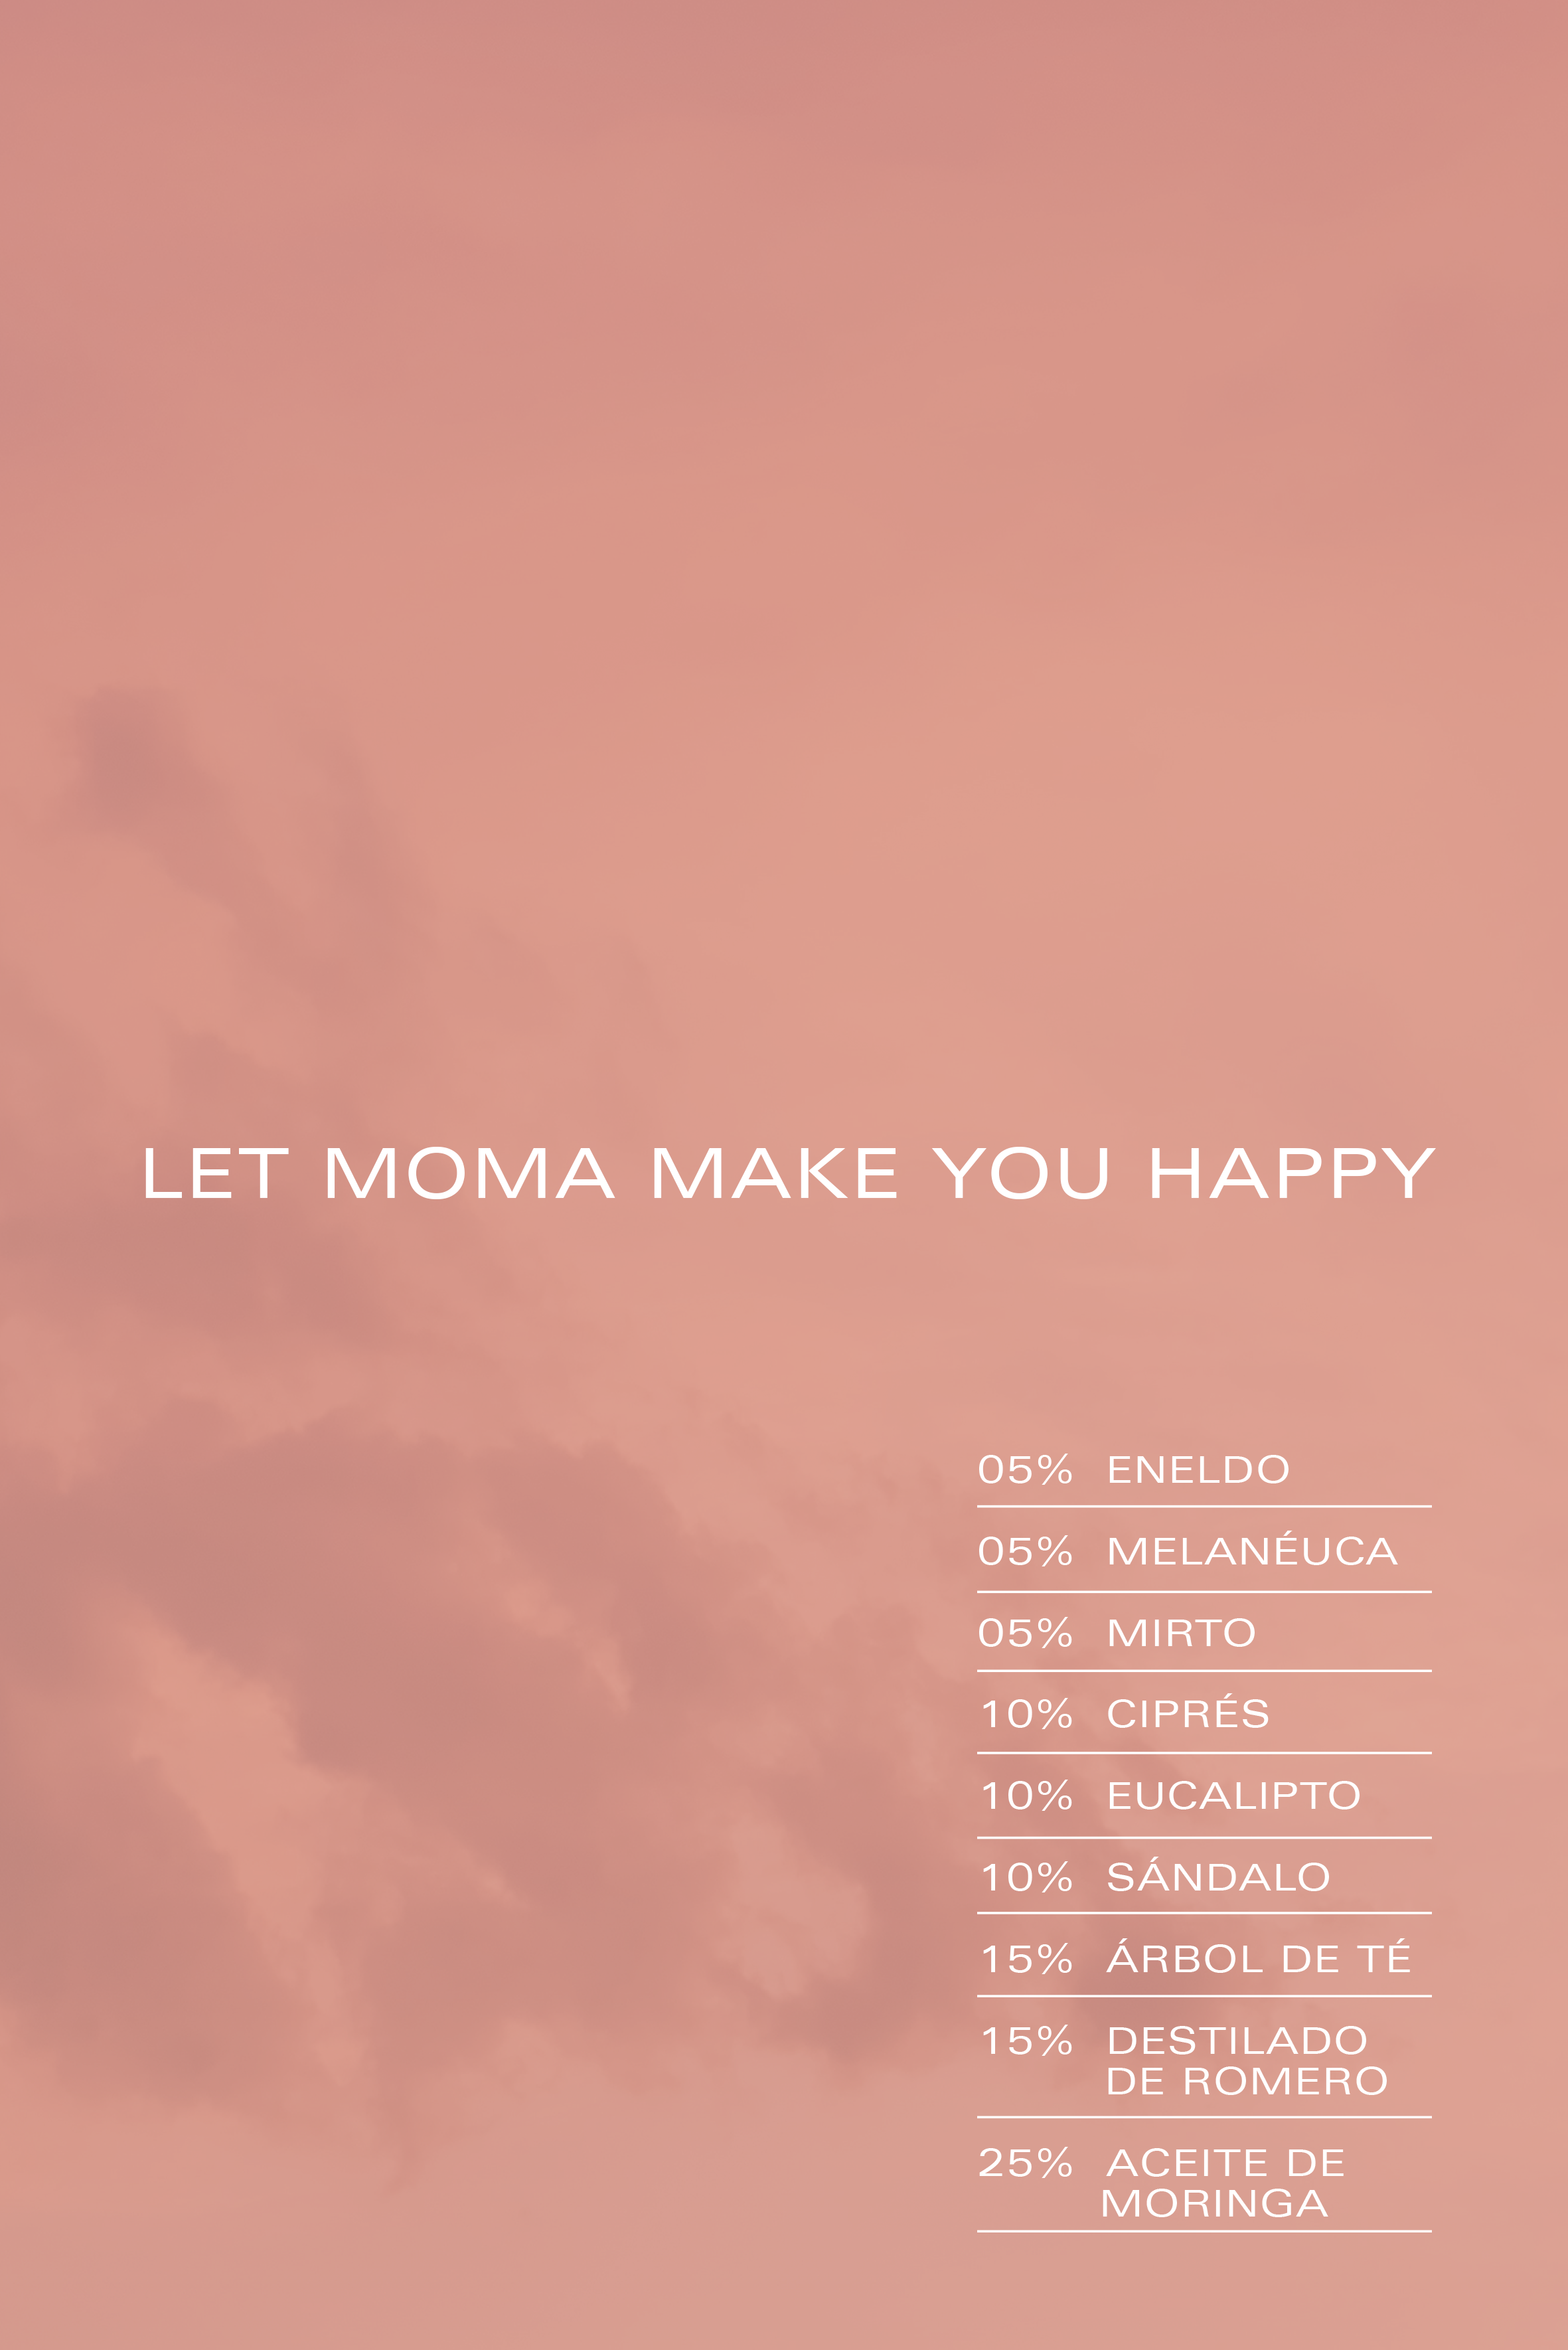 hz-moma10-happy2.png